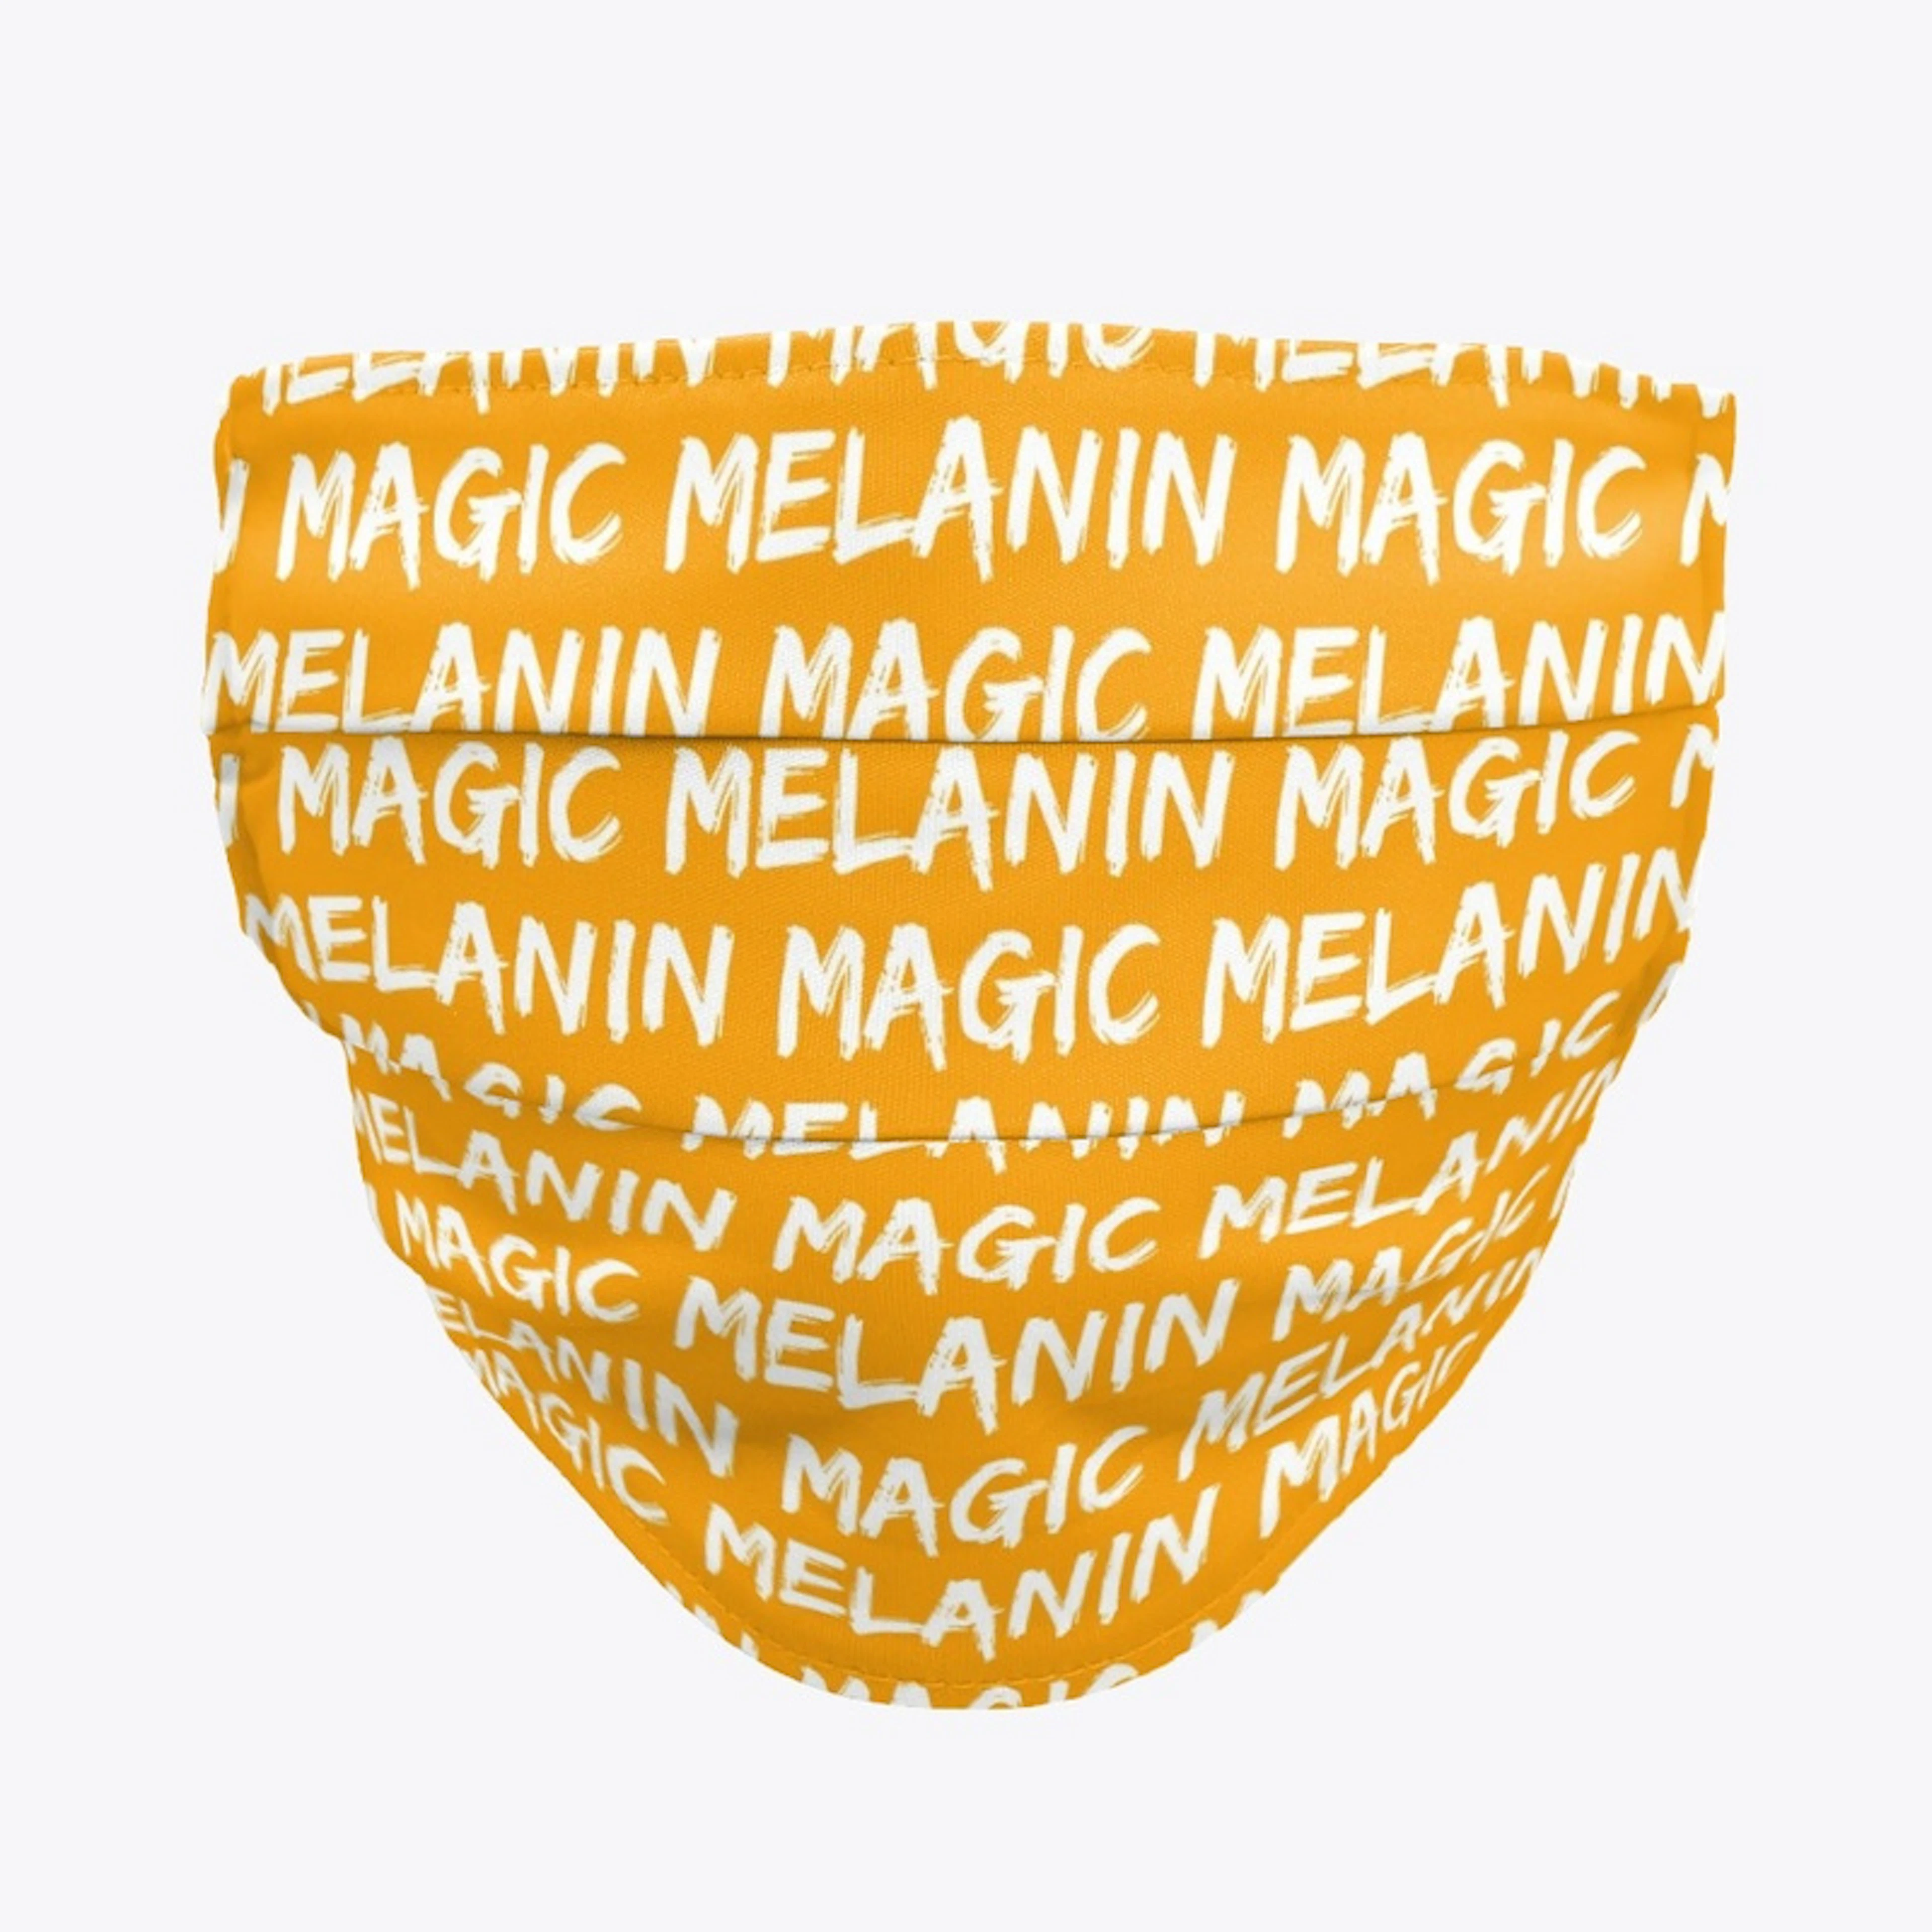 Melanin Magic Accessories Gold 